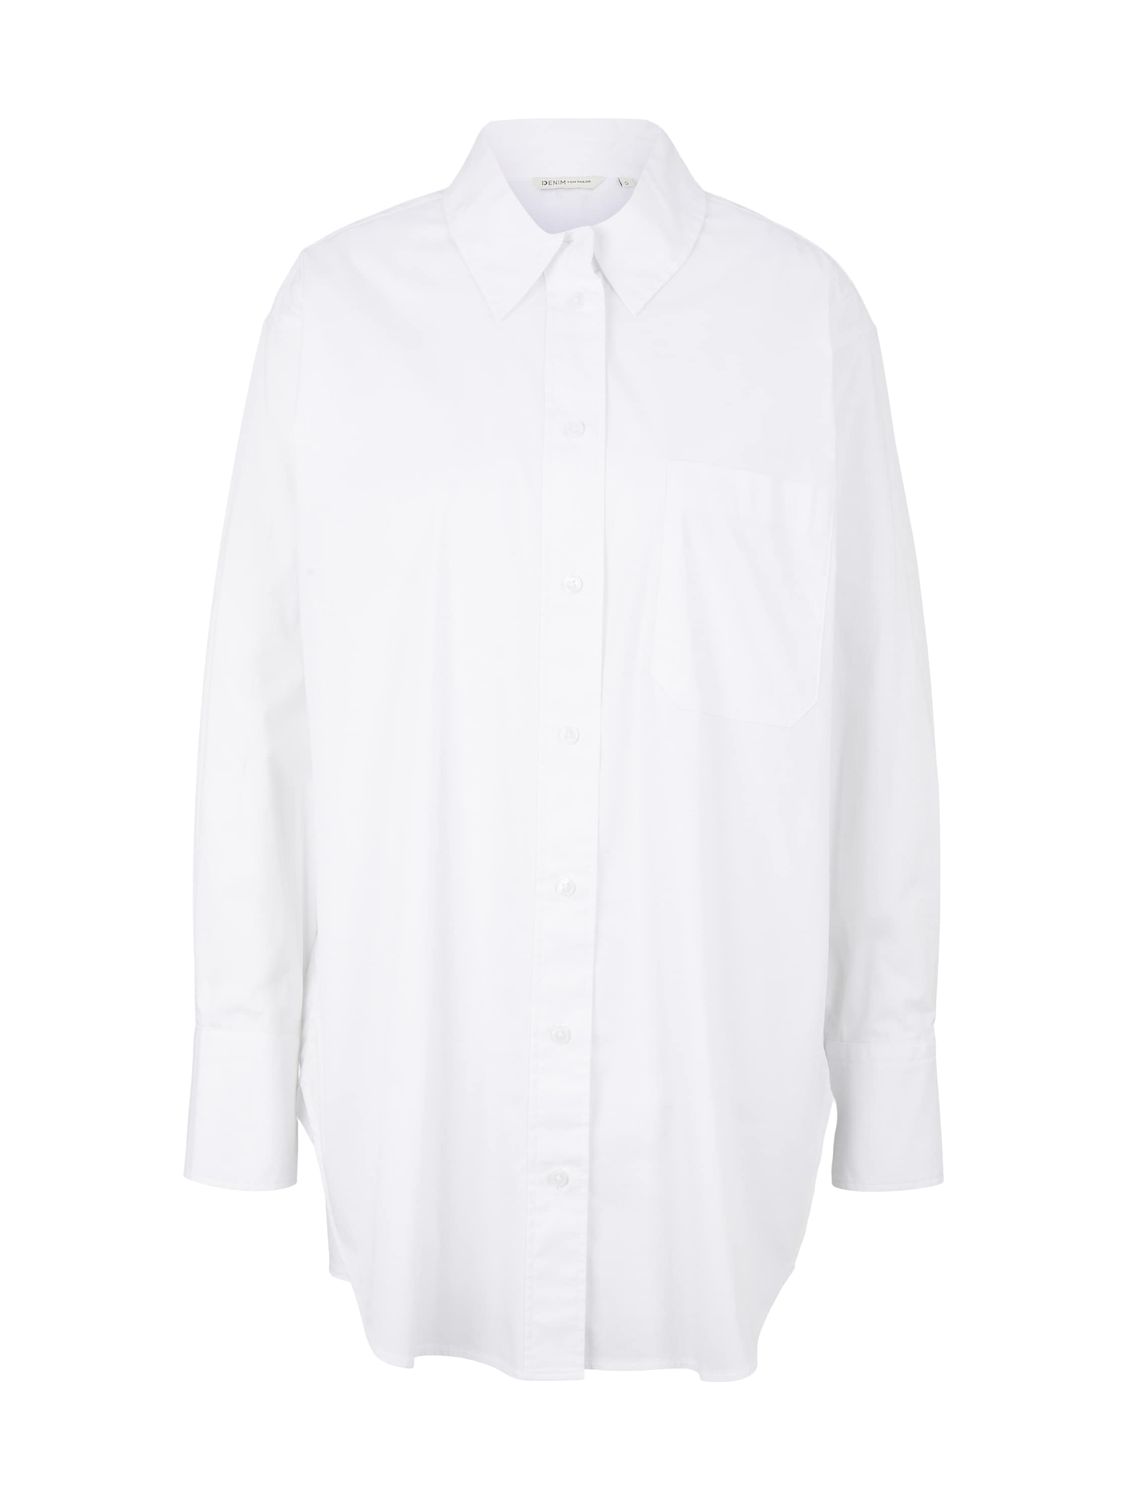 Блуза TOM TAILOR Denim CHEST POCKET, белый блуза tom tailor denim chest pocket синий